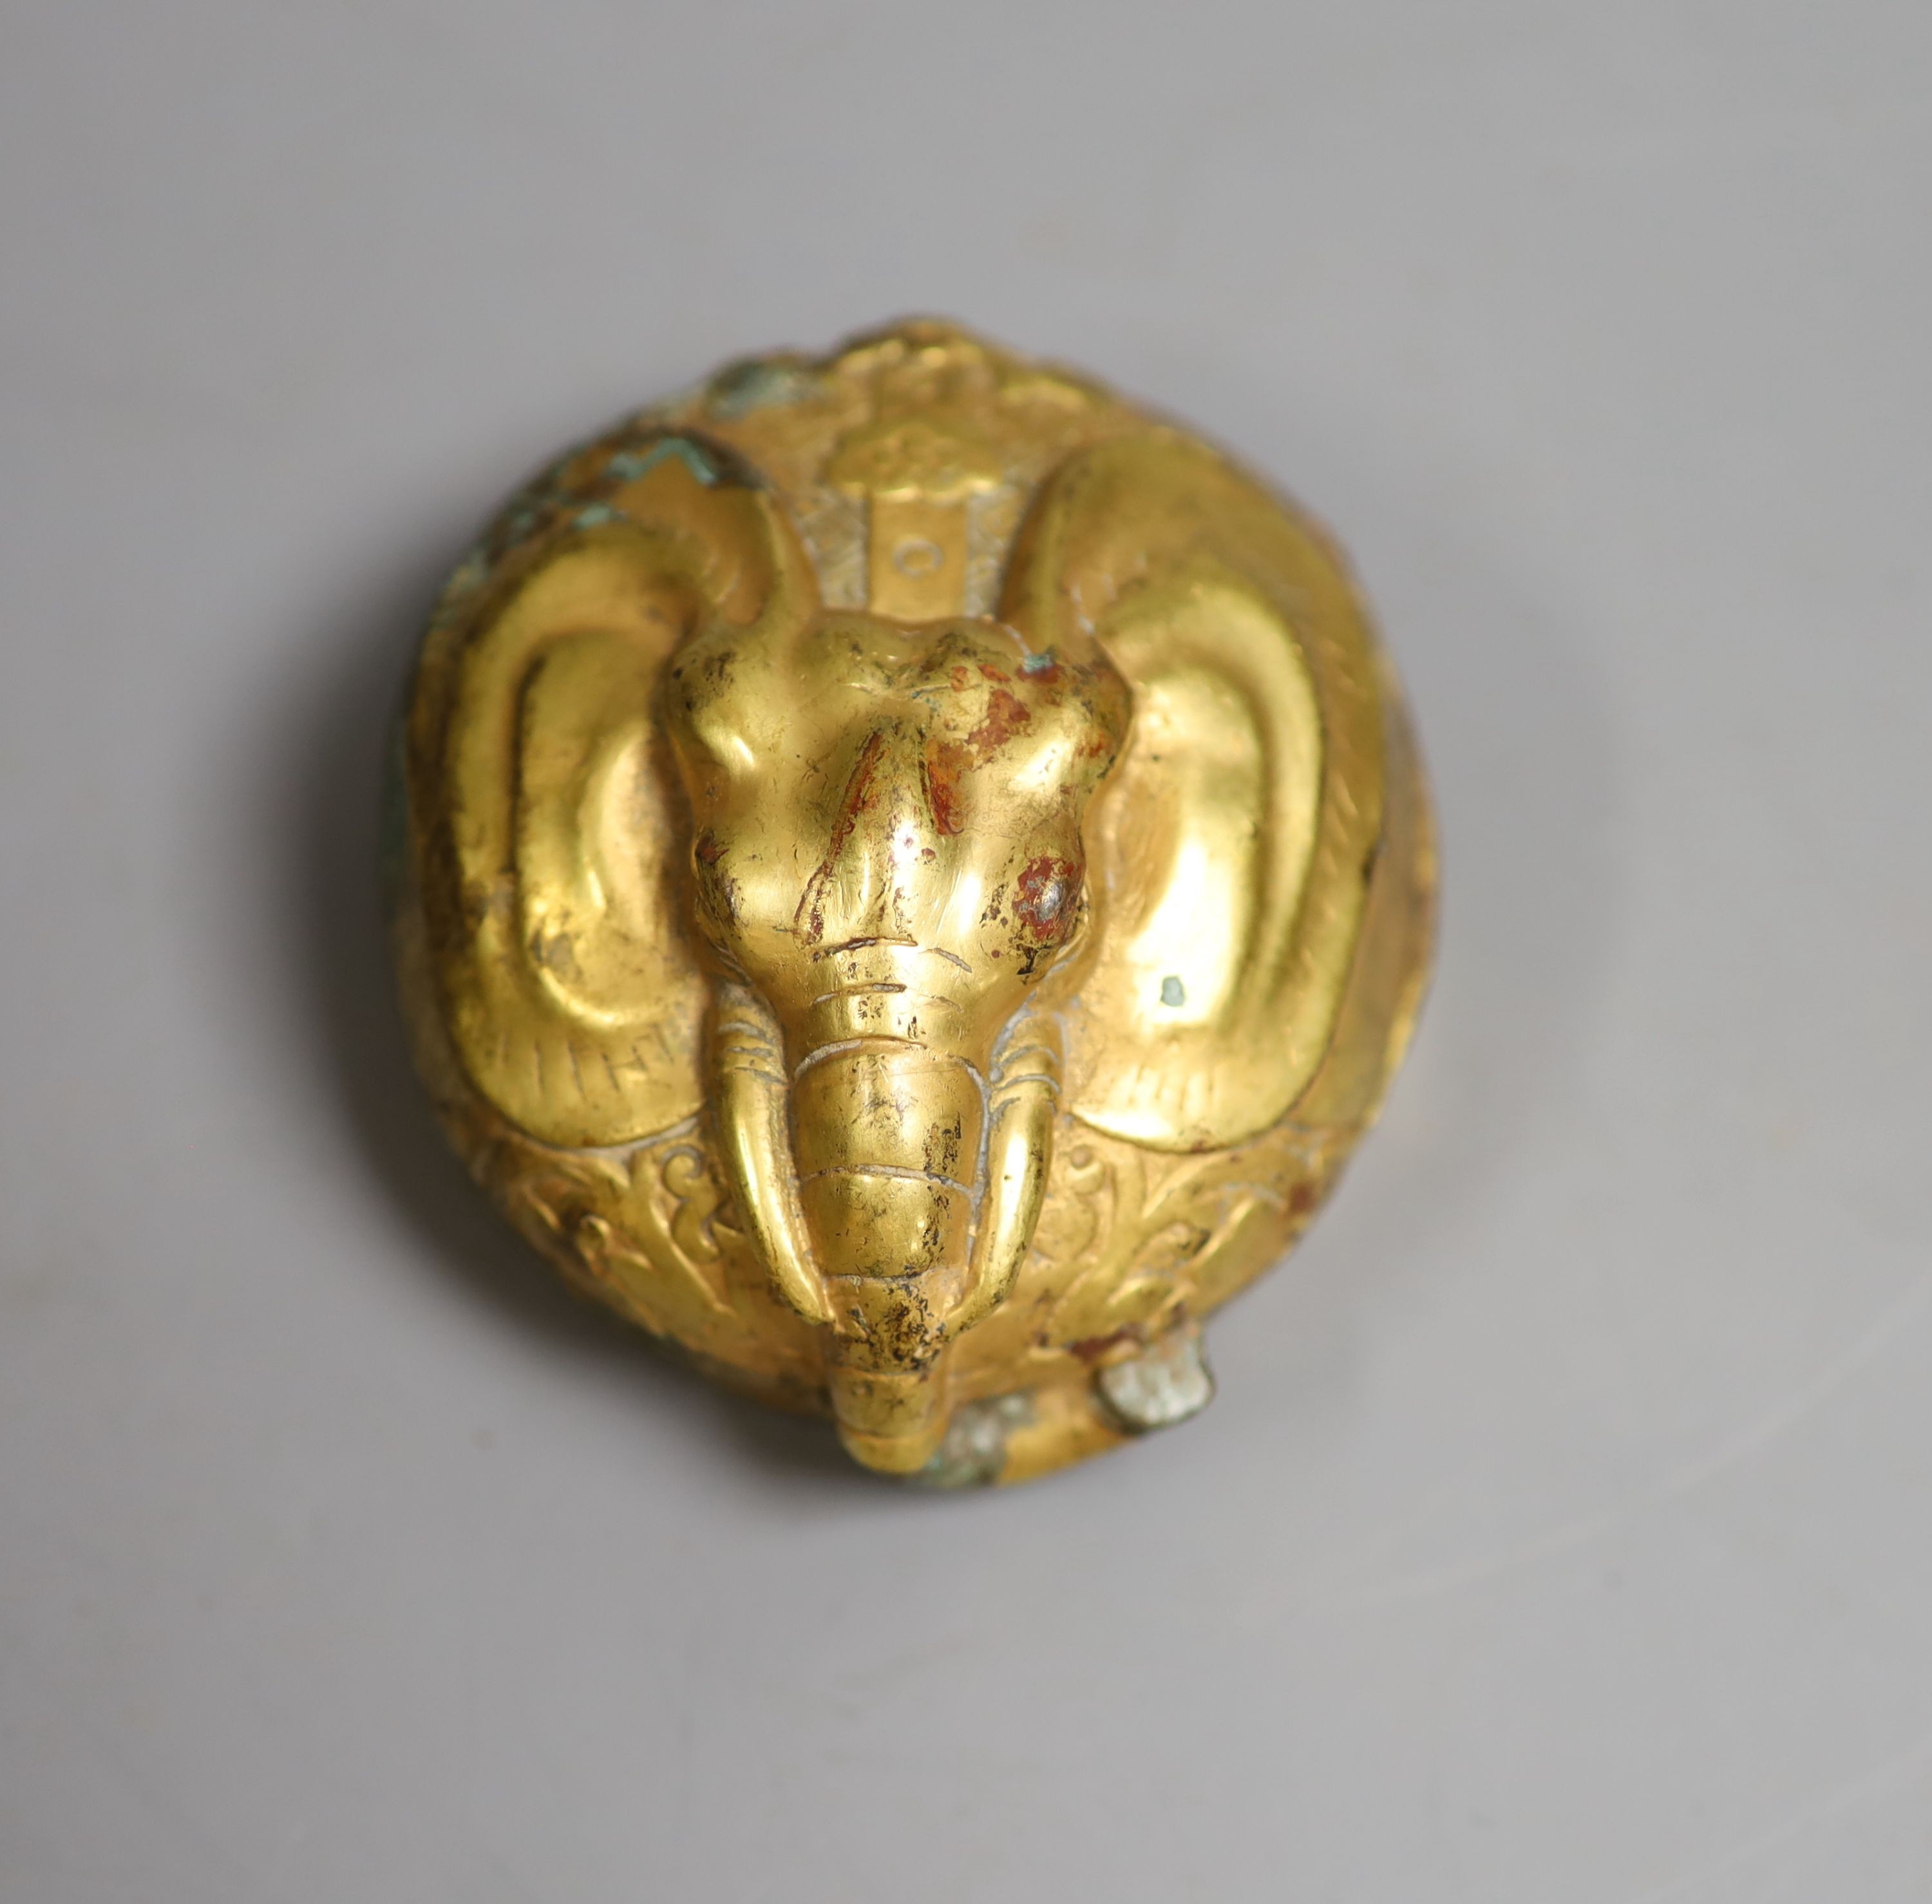 A Chinese gilt bronze elephant charm box, base 7cm diameter